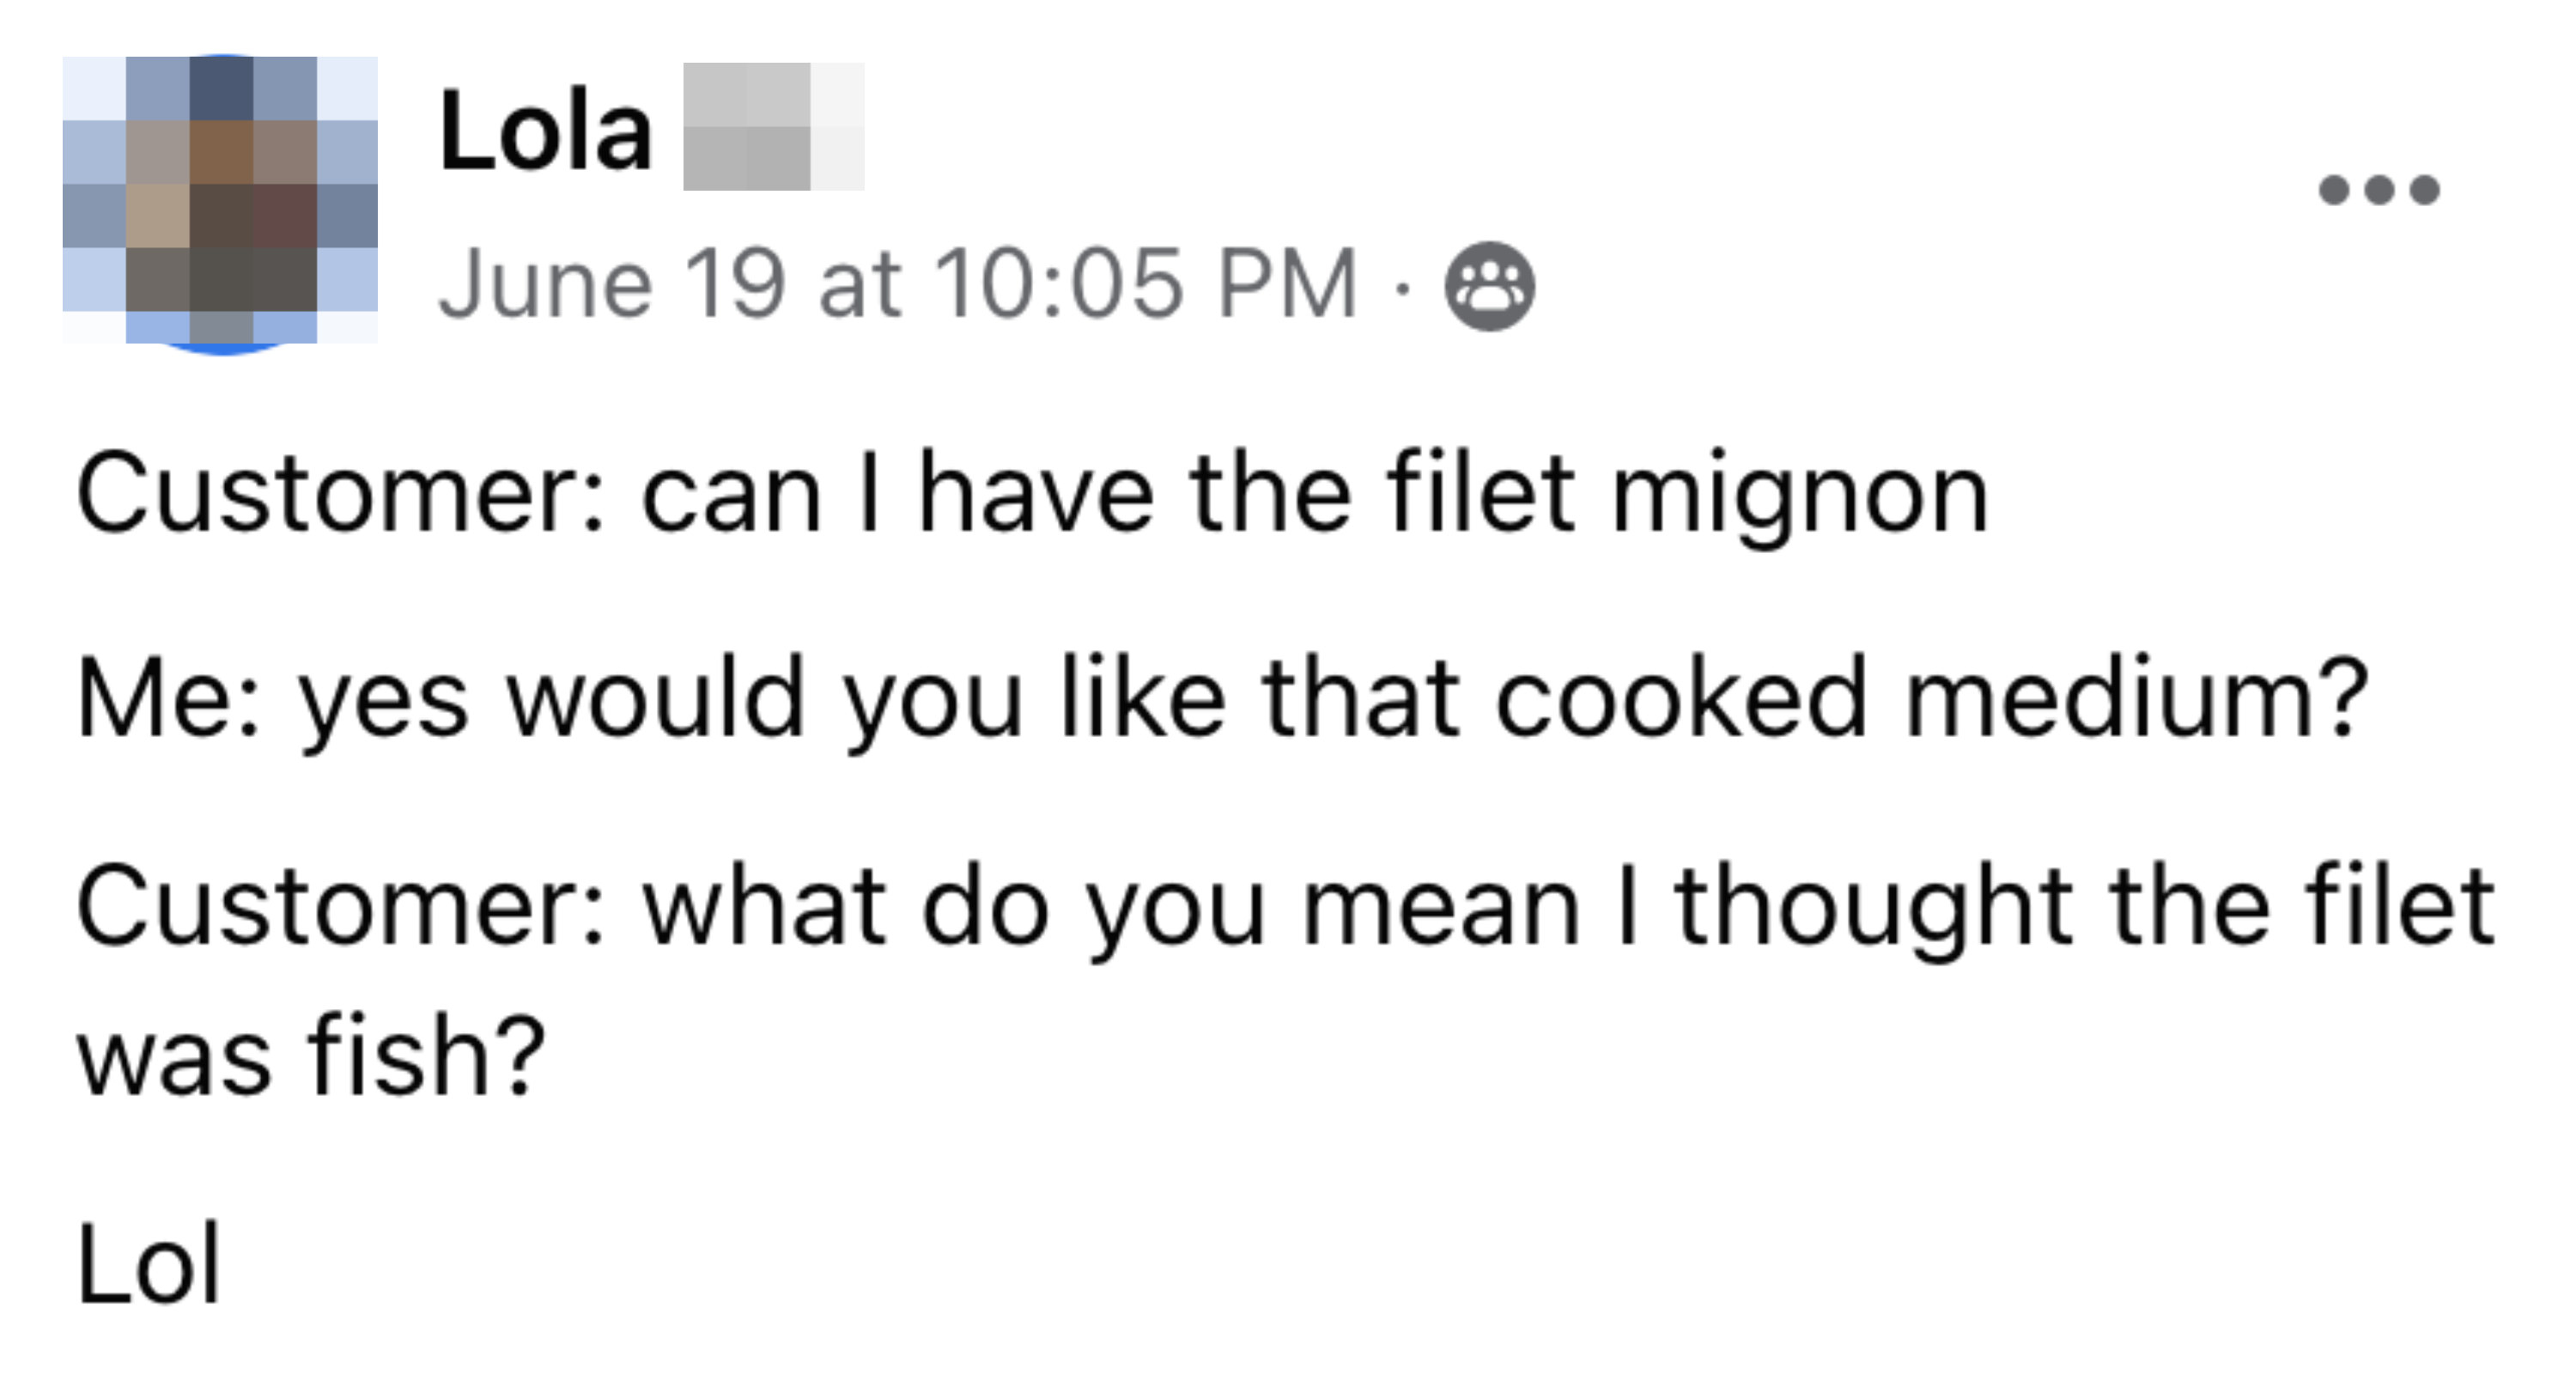 customer ordering the filet mignon thinking it is fish